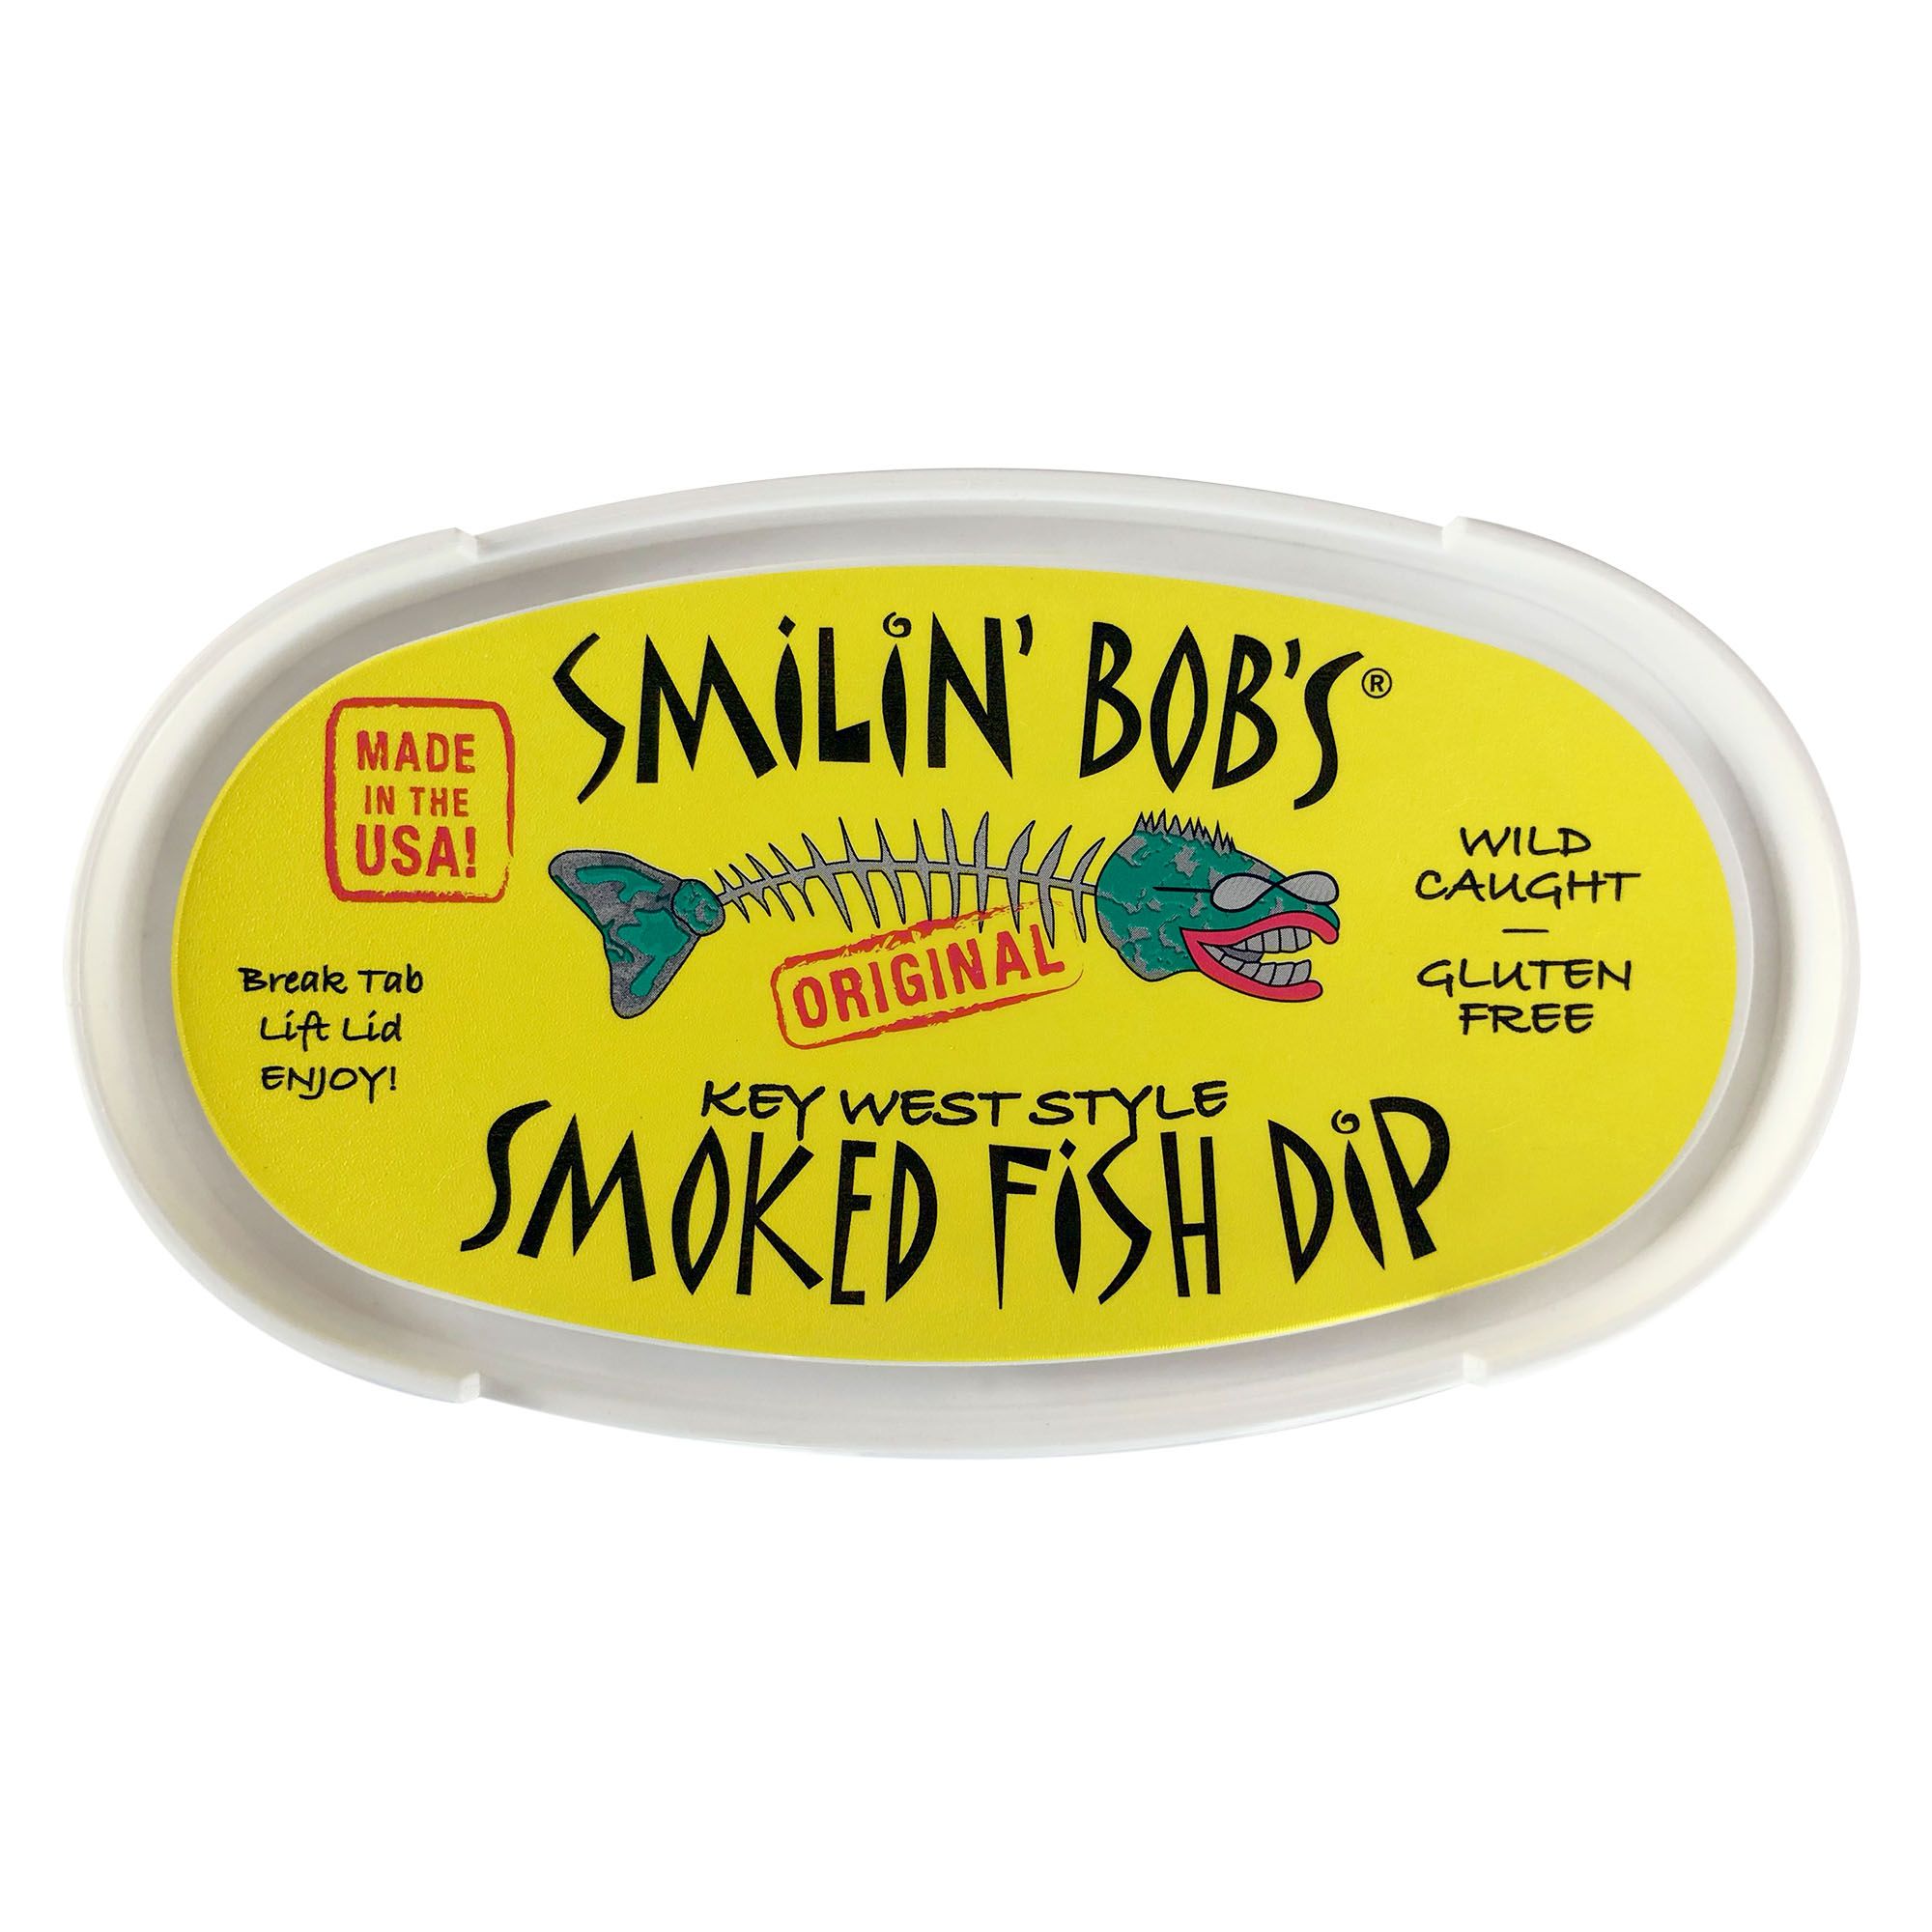 Smilin' Bob's Smoked Fish Dip (15.5 oz.) - Sam's Club